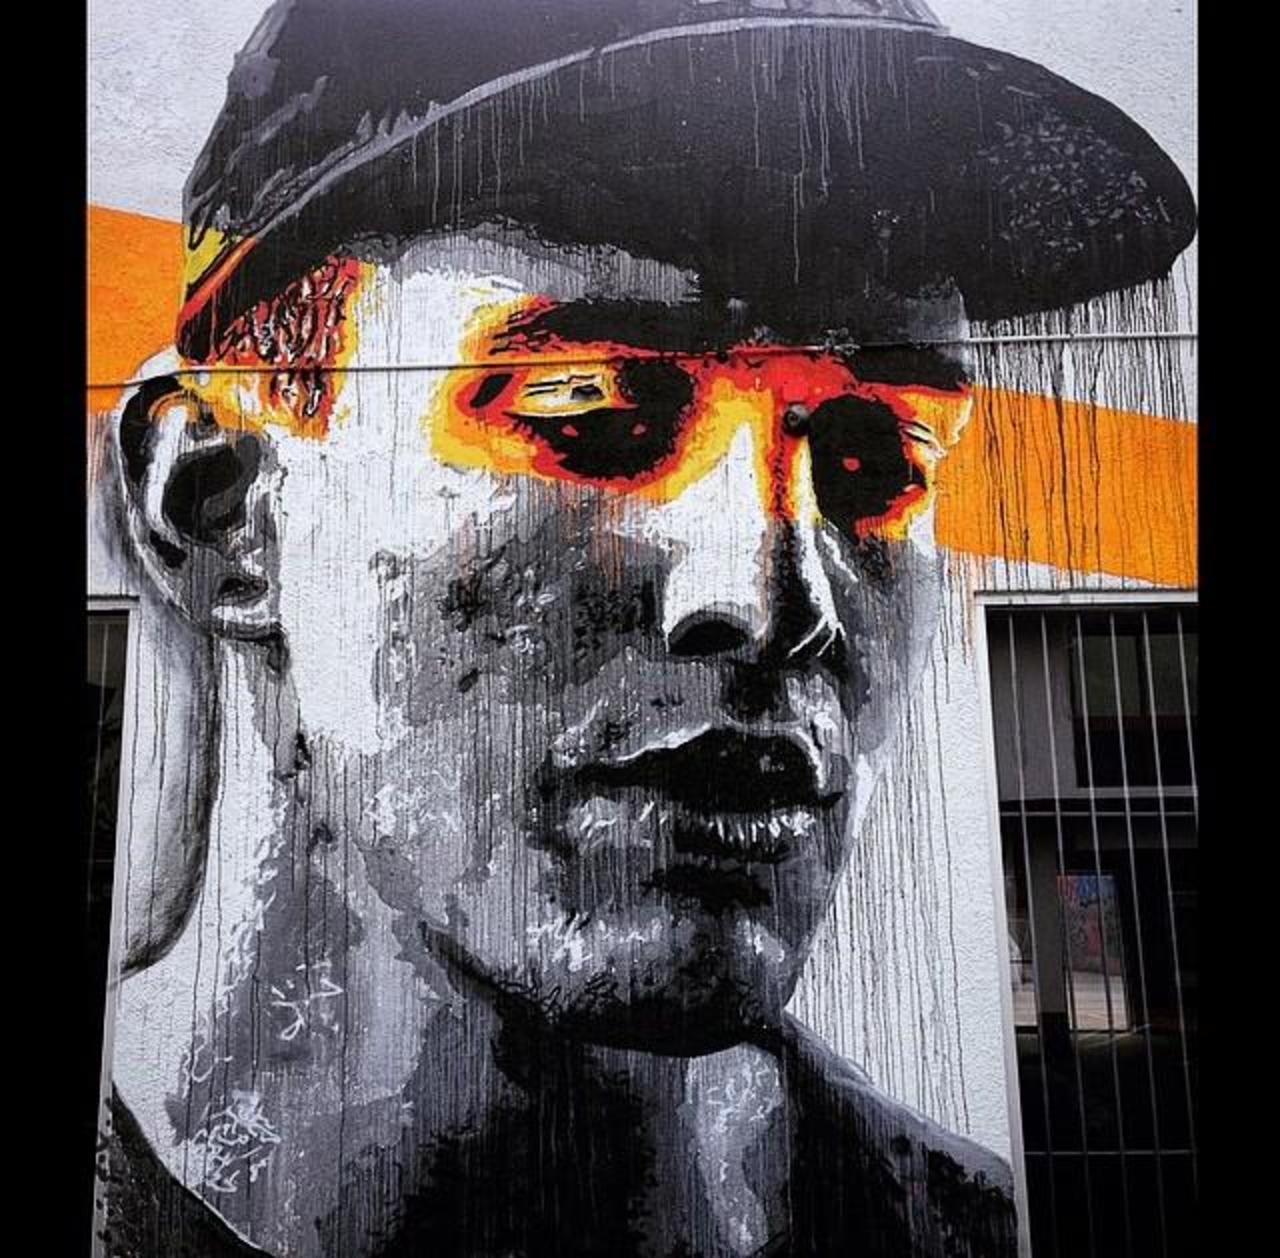 RT @GoogleStreetArt: Artist Nils Westergard Street Art portrait in Miami 

#art #graffiti #mural #streetart http://t.co/DVKoeSqggO